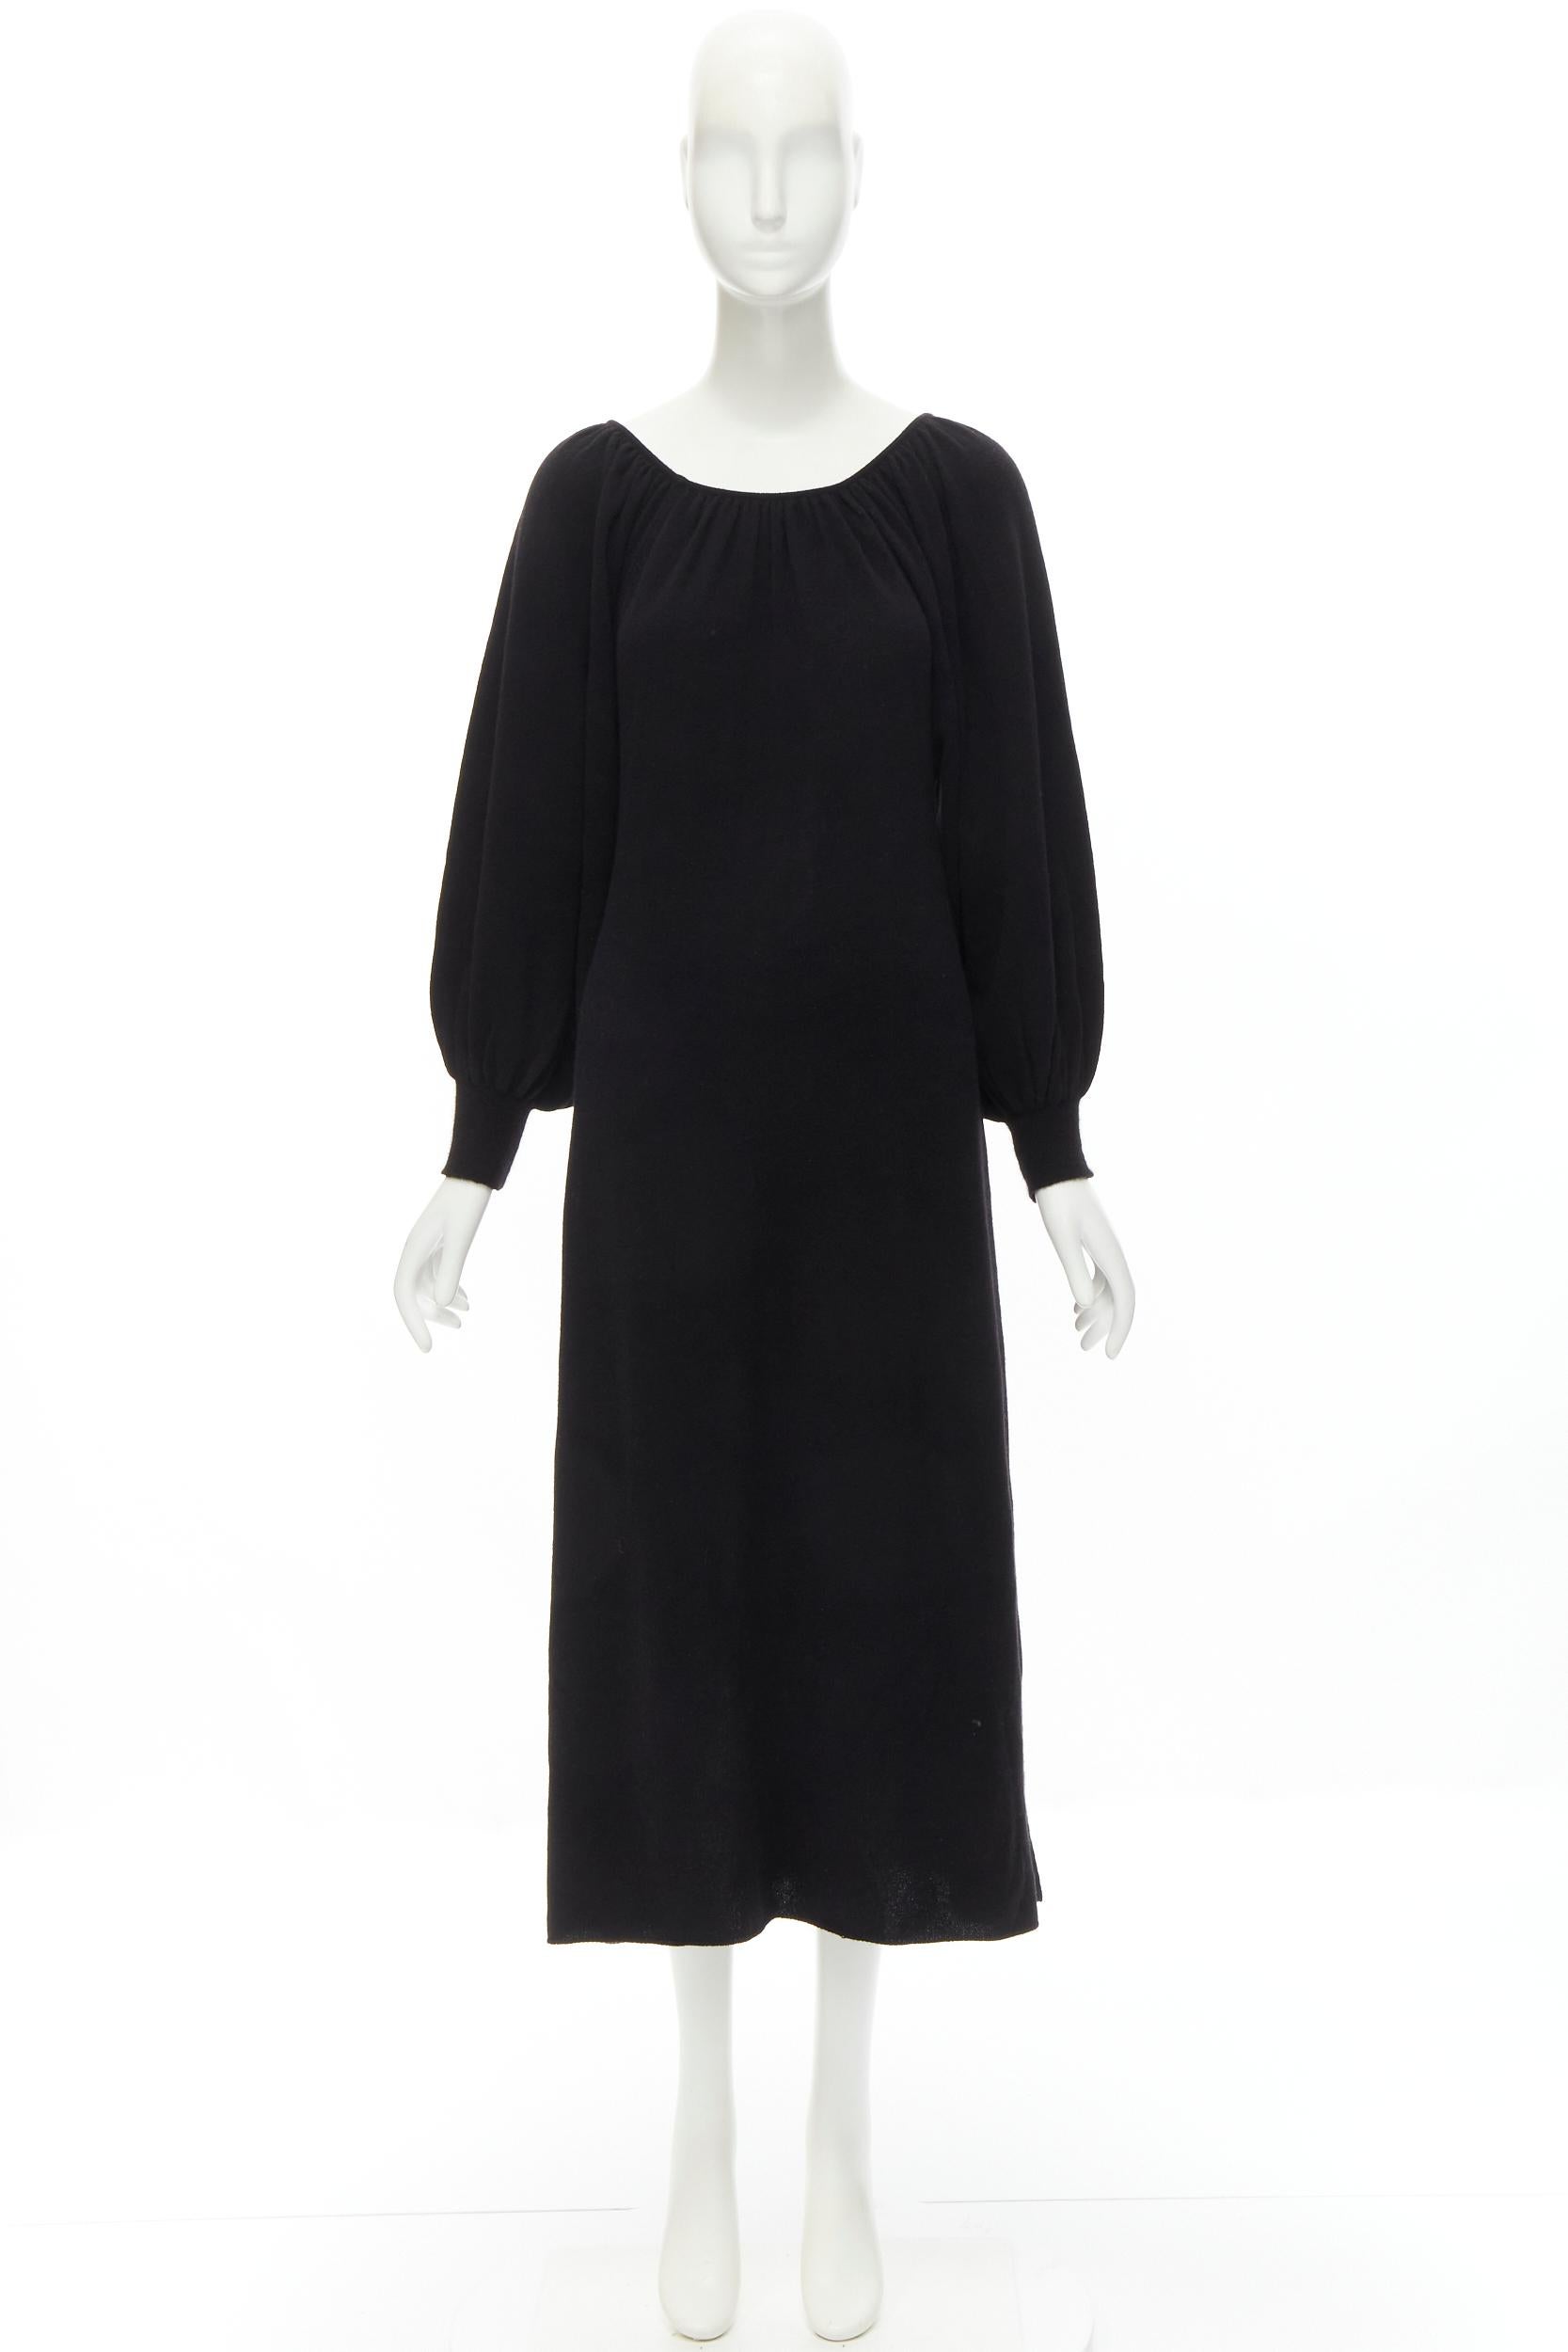 RYAN ROCHE 100% cashmere black pleated collar bubble sleeve midi dress S For Sale 3